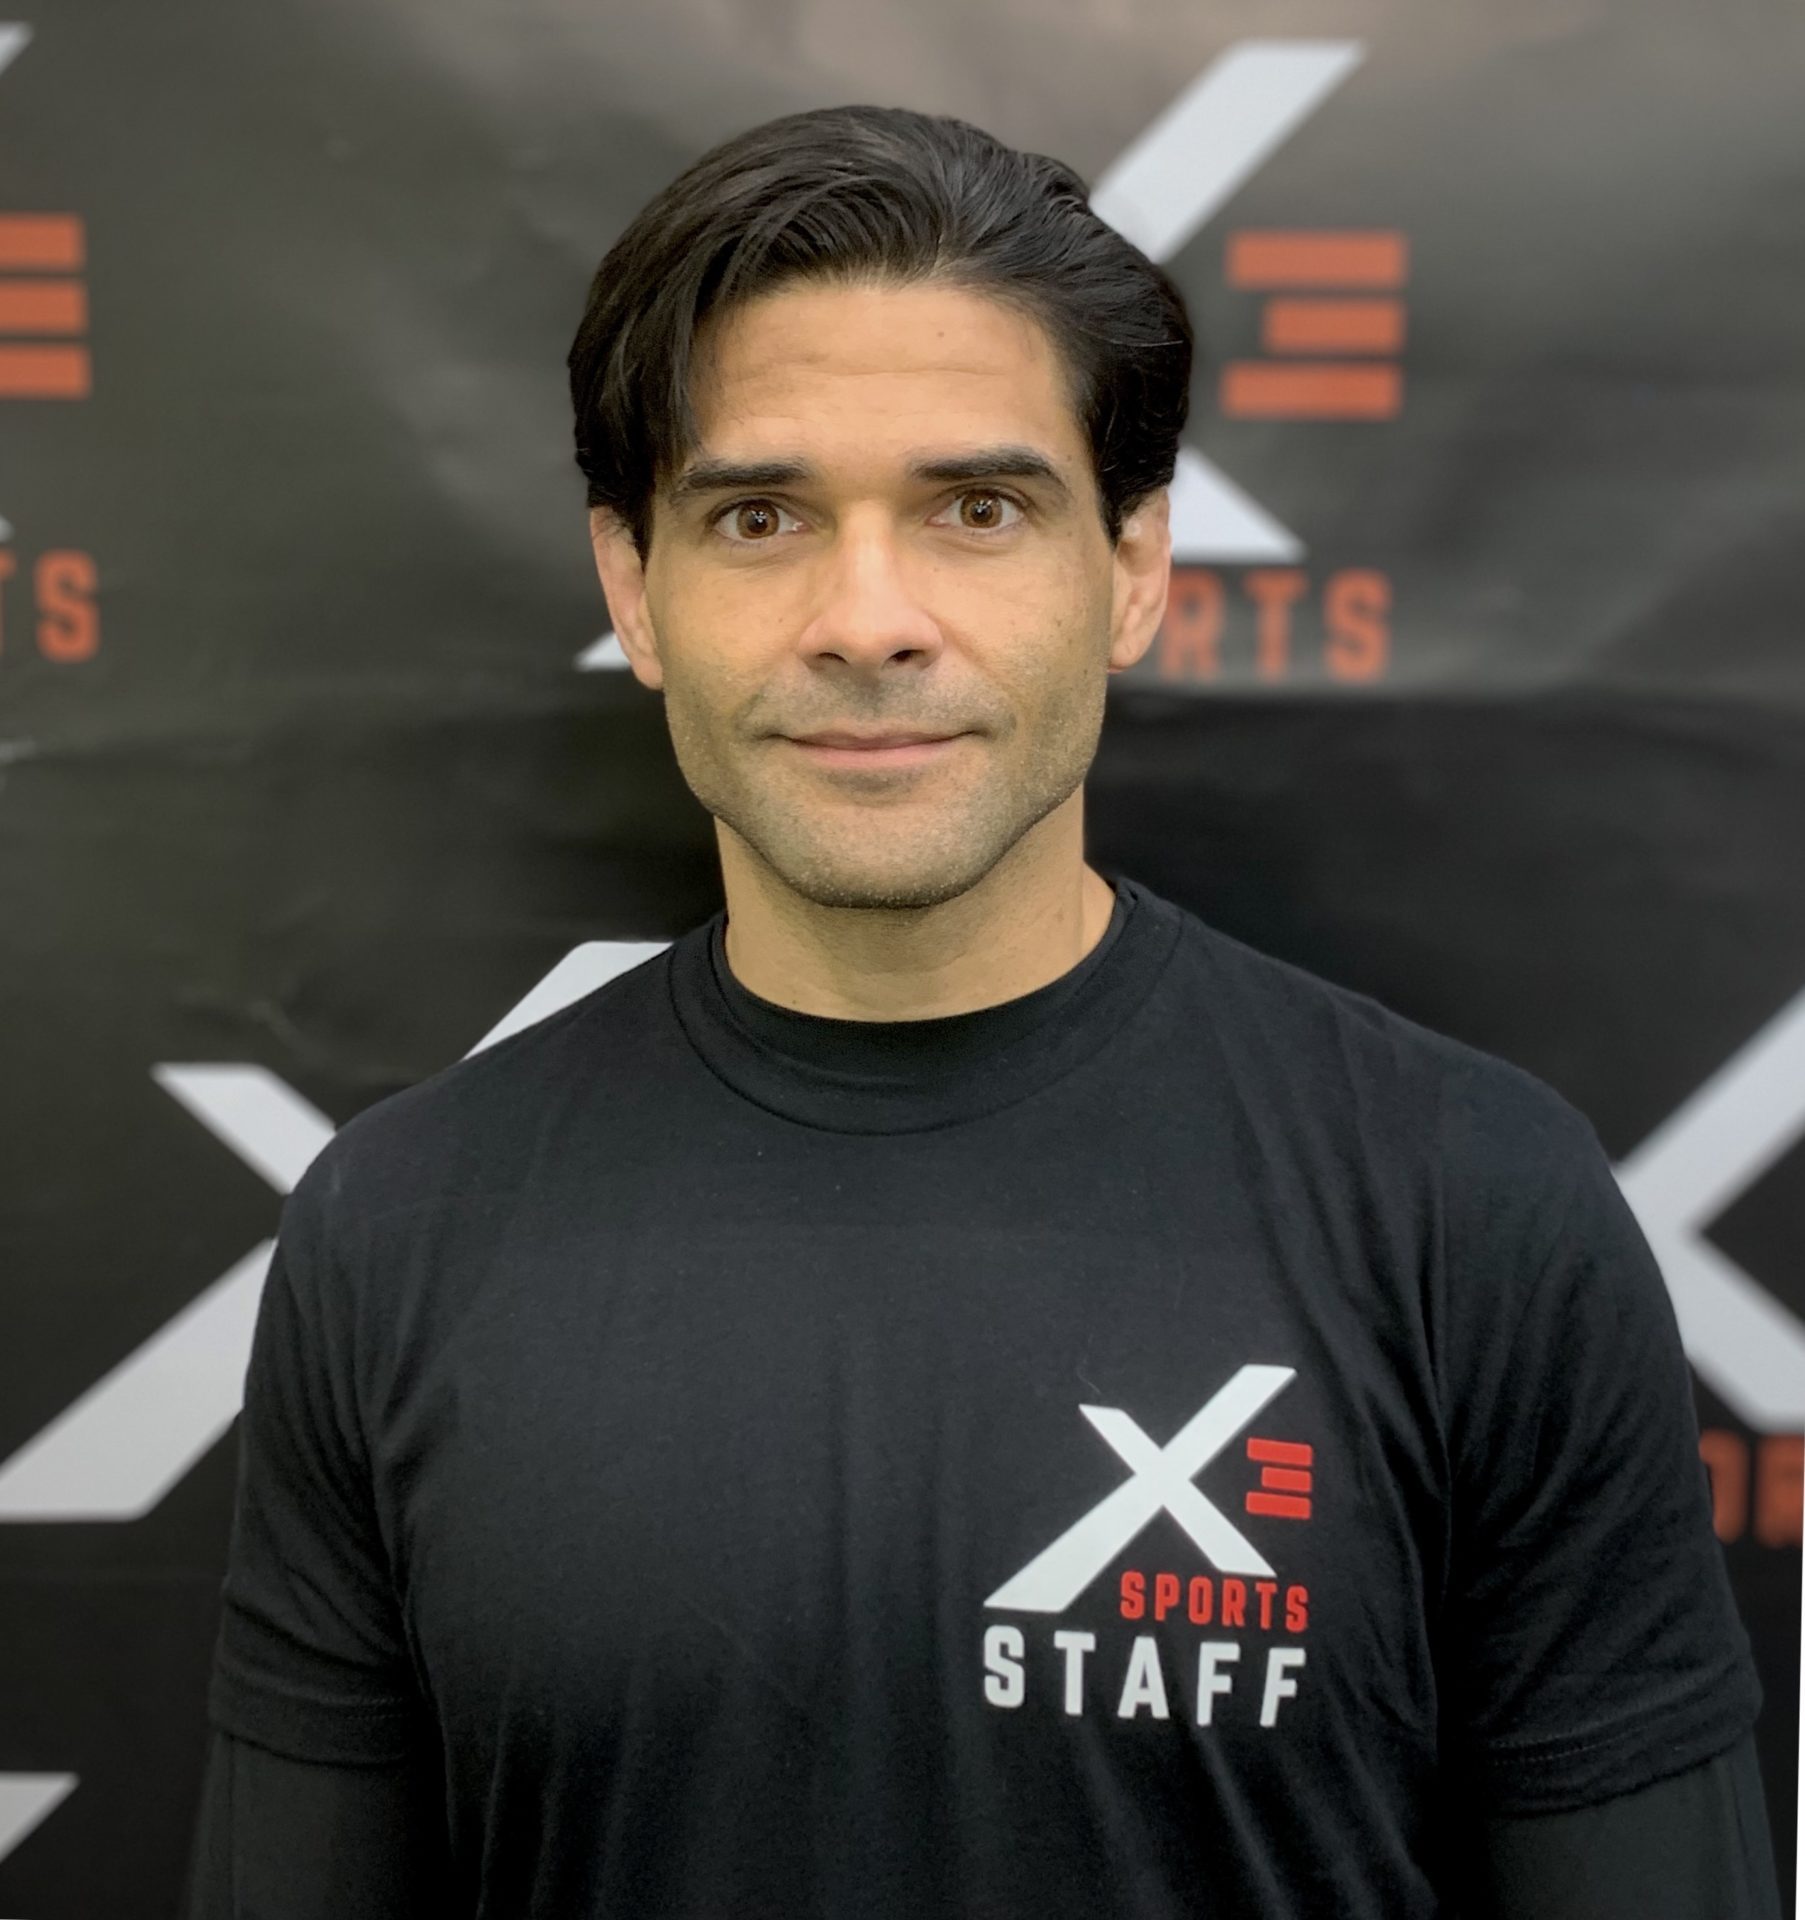 Omar Beniquez-Cardona X3 Sports Team Member